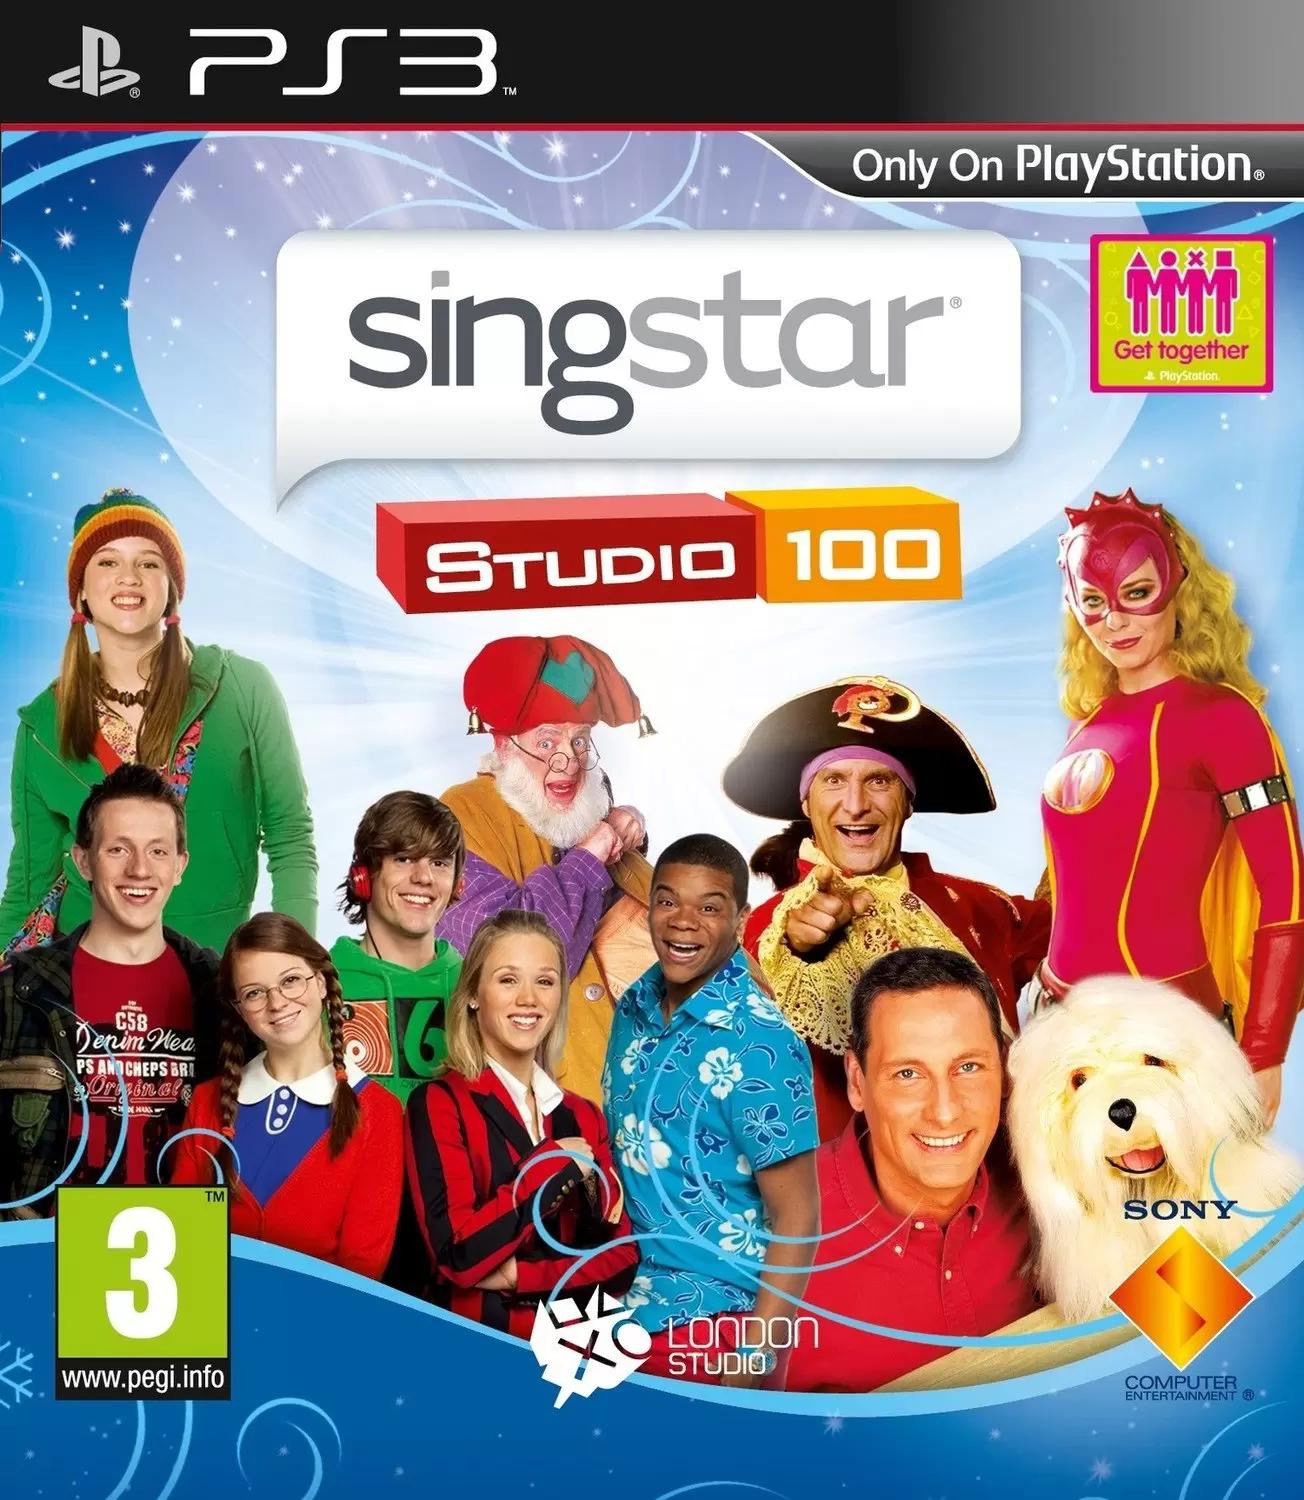 PS3 Games - SingStar Studio 100